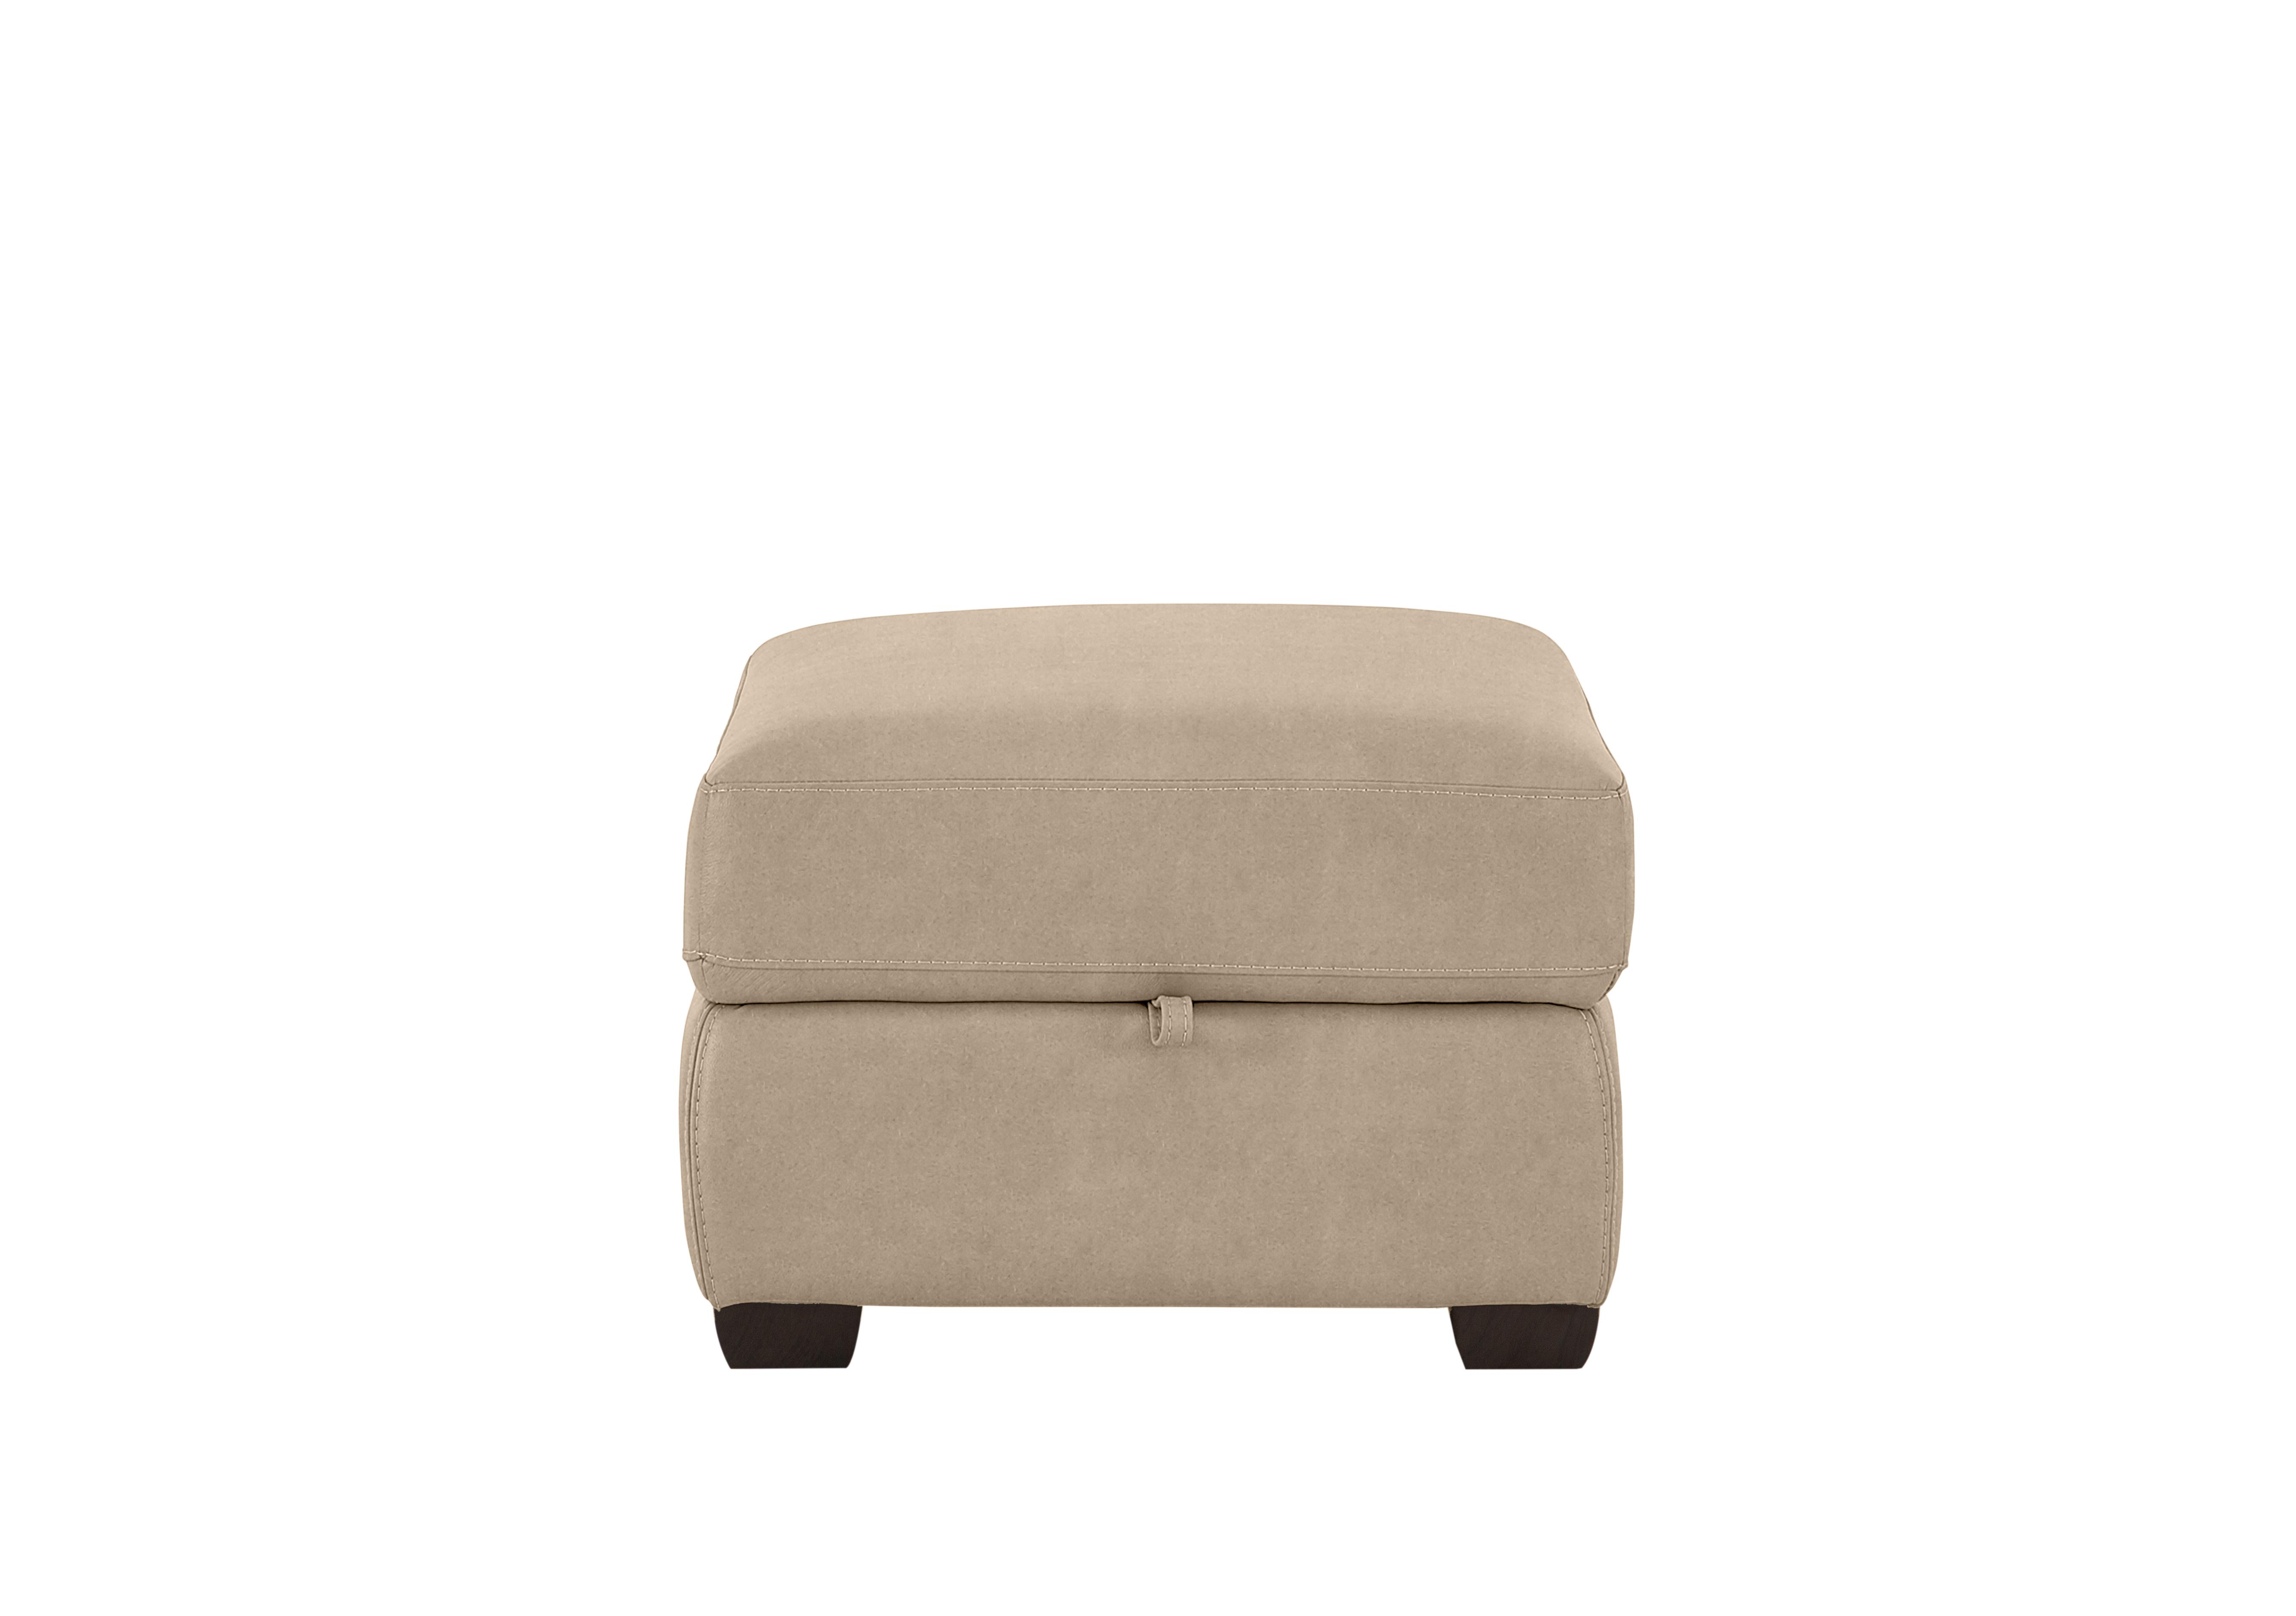 Chicago Fabric Storage Footstool in Bfa-Blj-R20 Bisque on Furniture Village